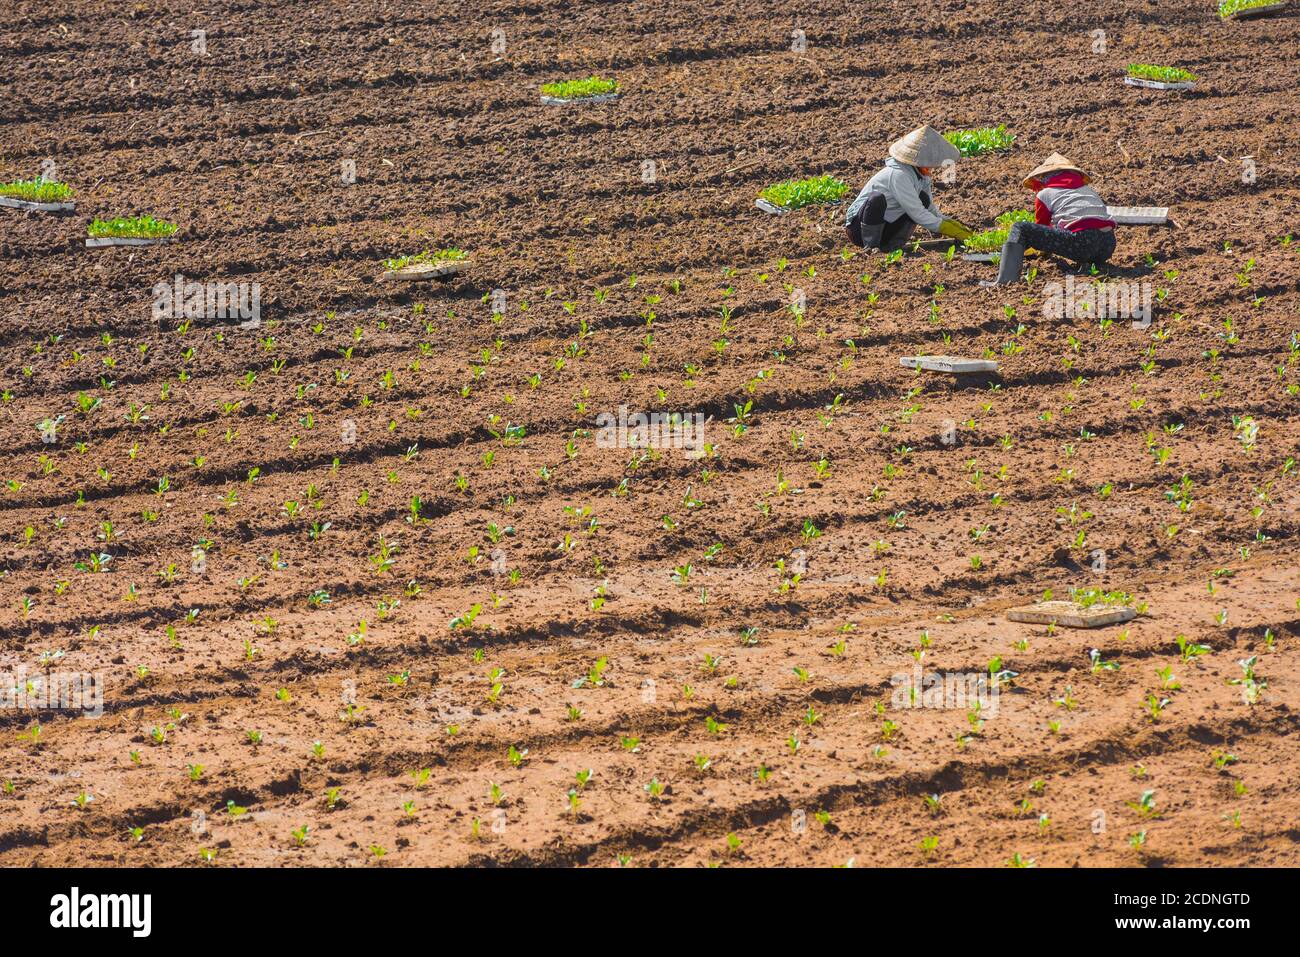 two Vietnamese women prick seedlings Stock Photo